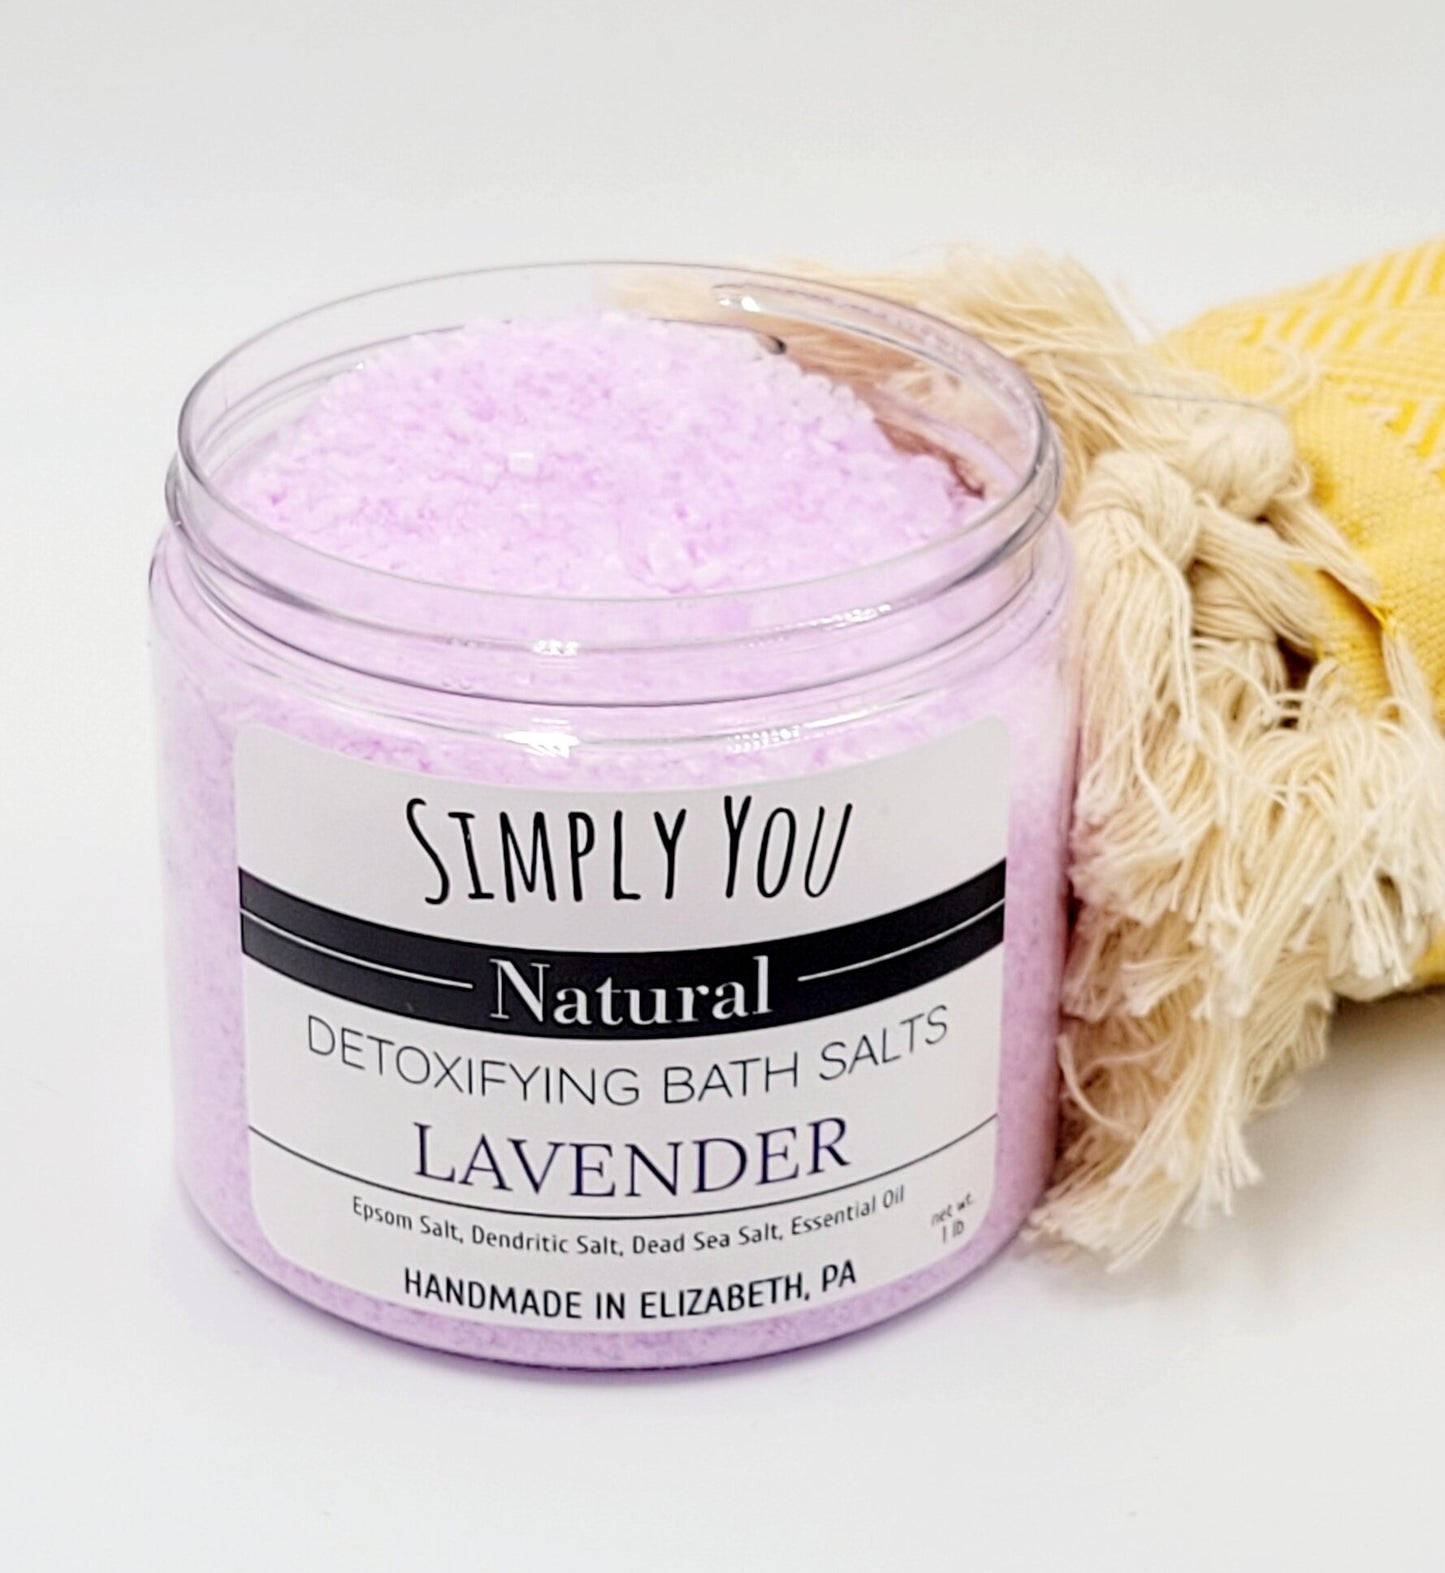 Detoxifying Bath Salt Lavender